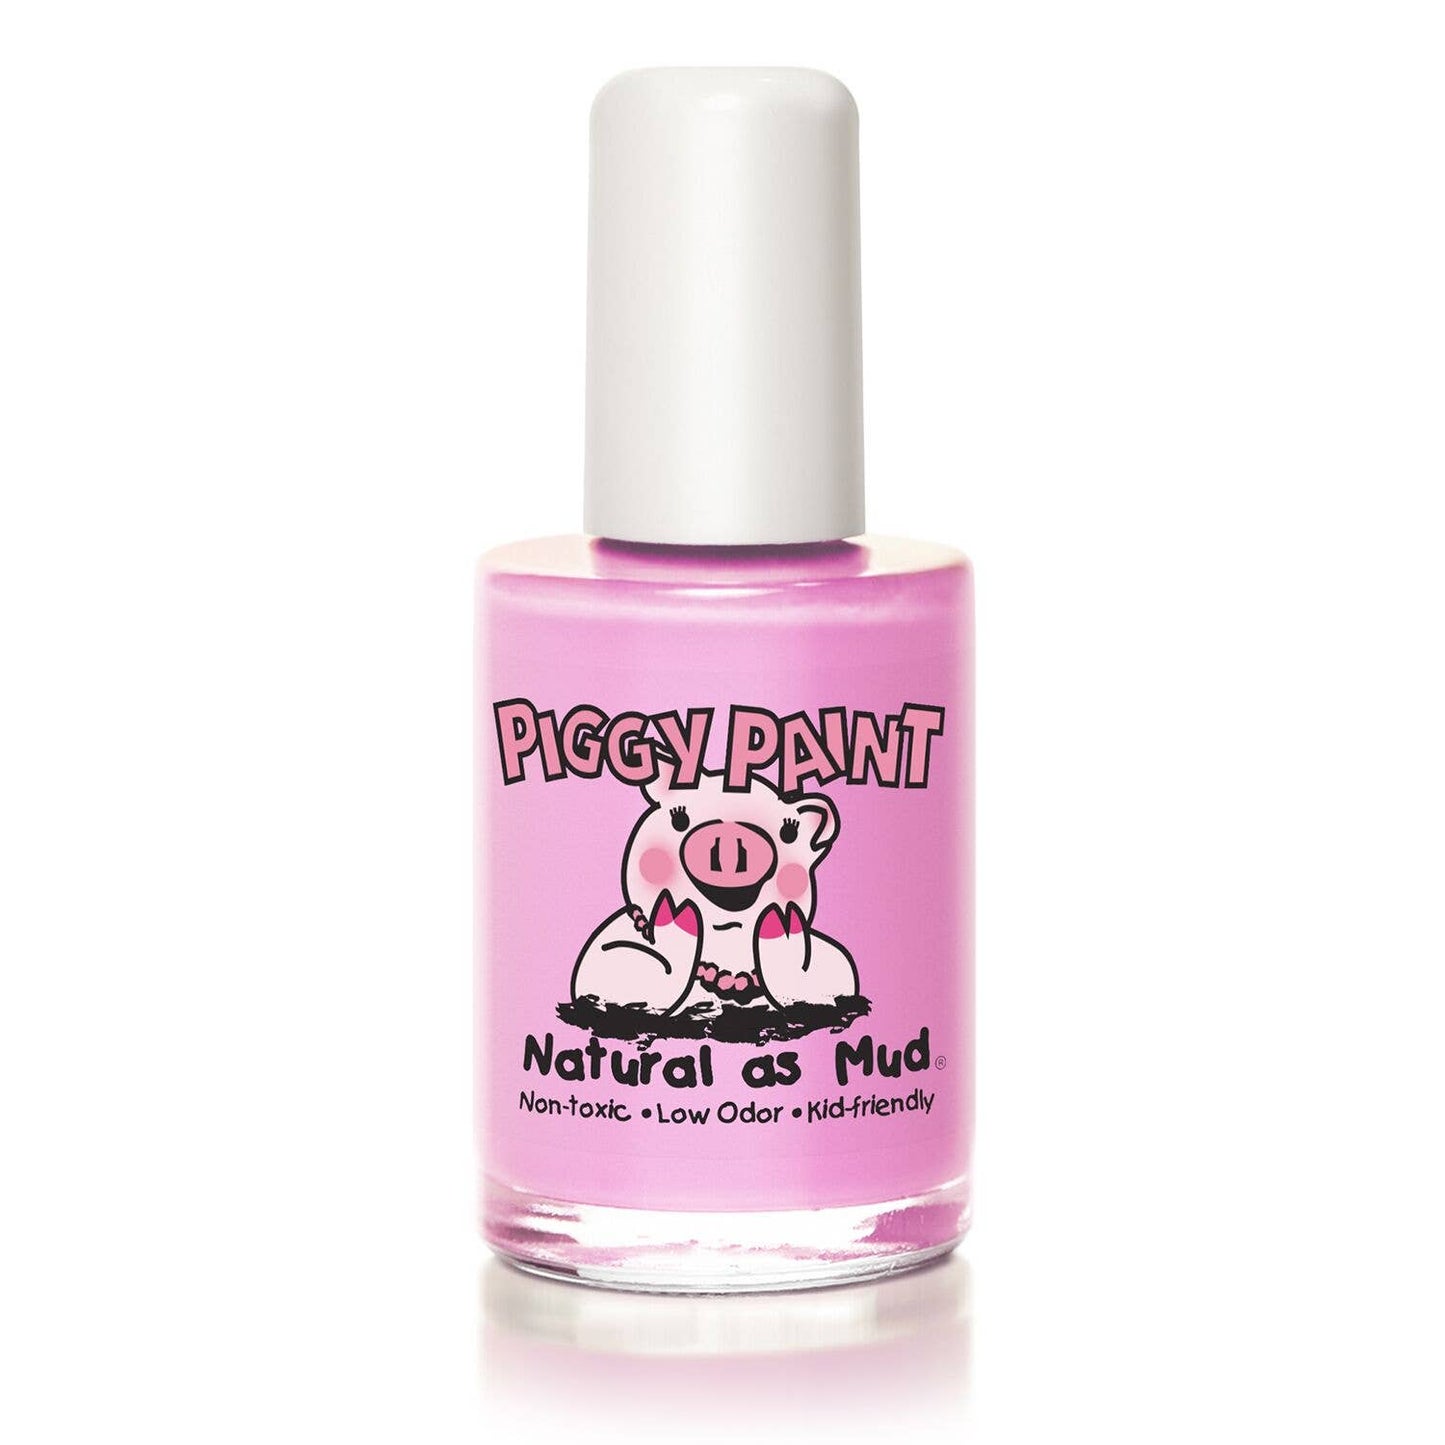 Piggy Paint - Pinkie Promise Nail Polish